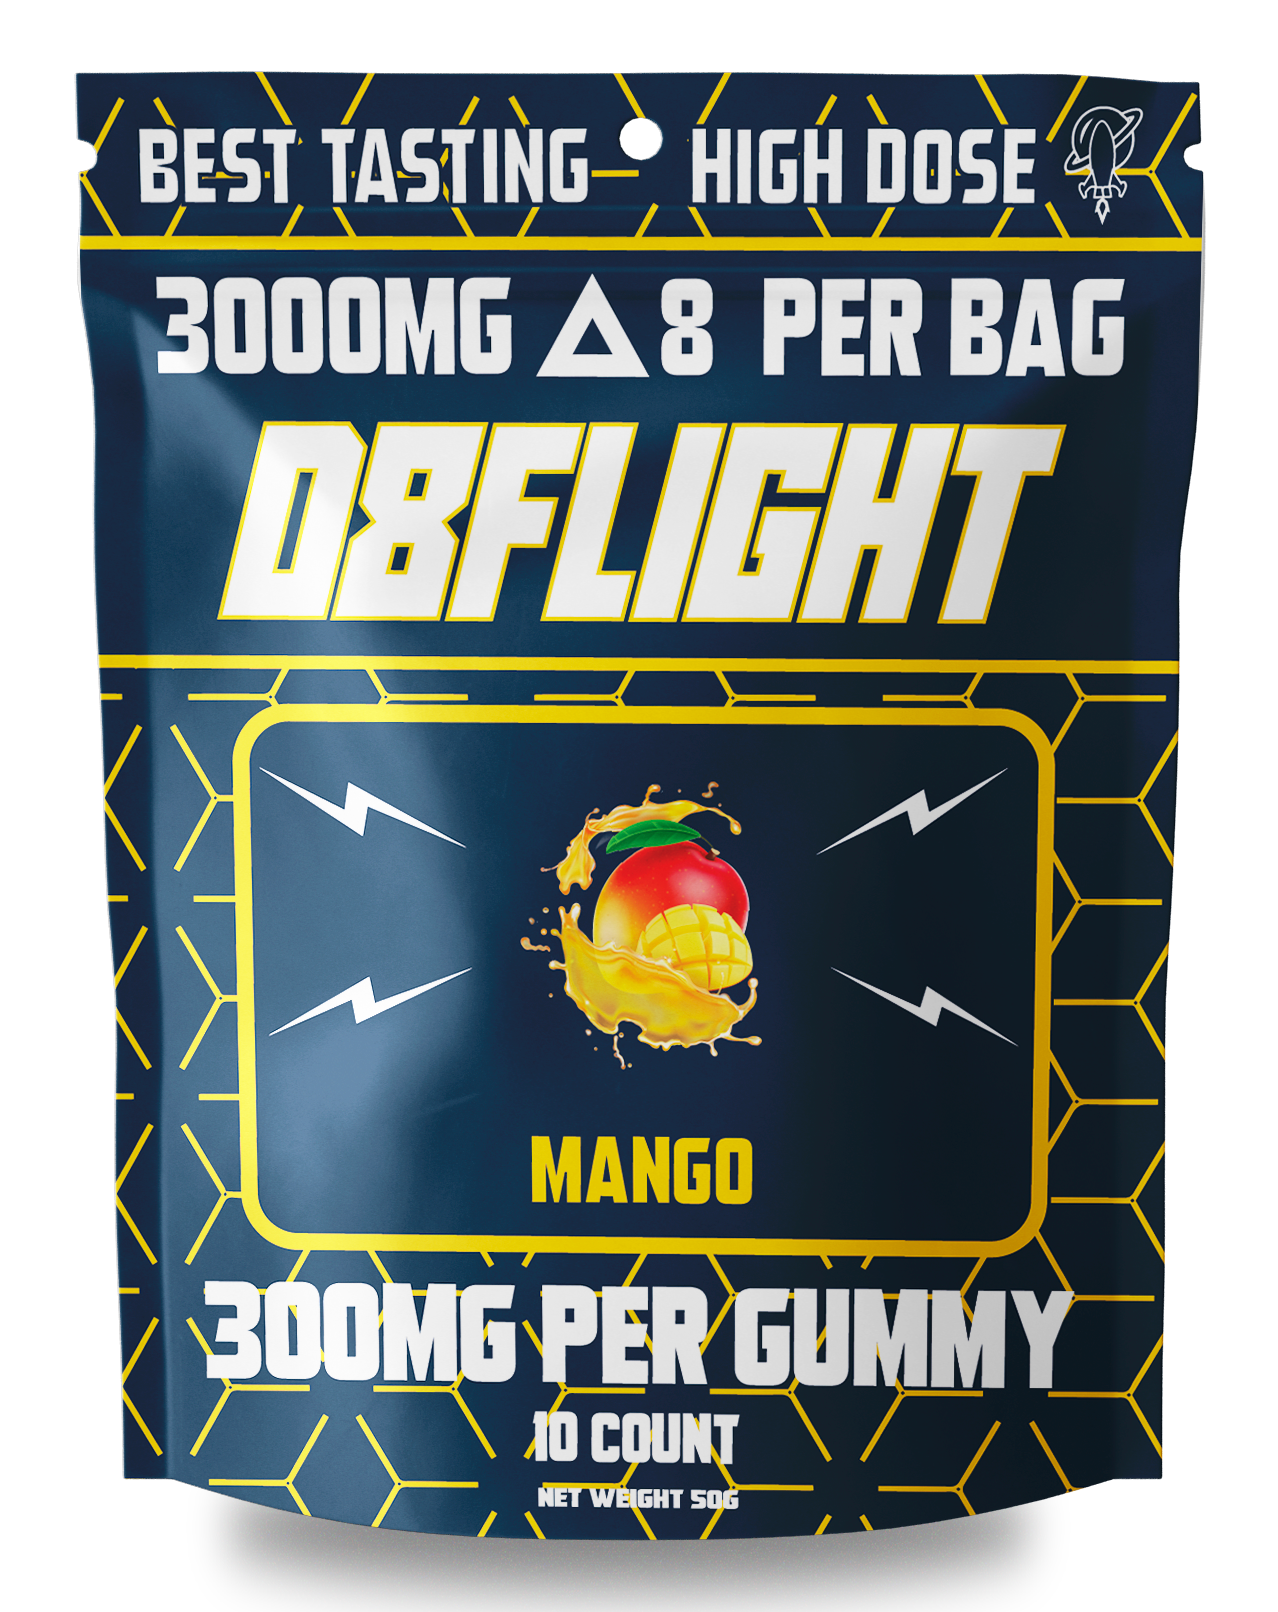 D8Flight - Heavy Hitter Dose (Delta8) - Gummies & Edibles (300mg x 25) - MK Distro